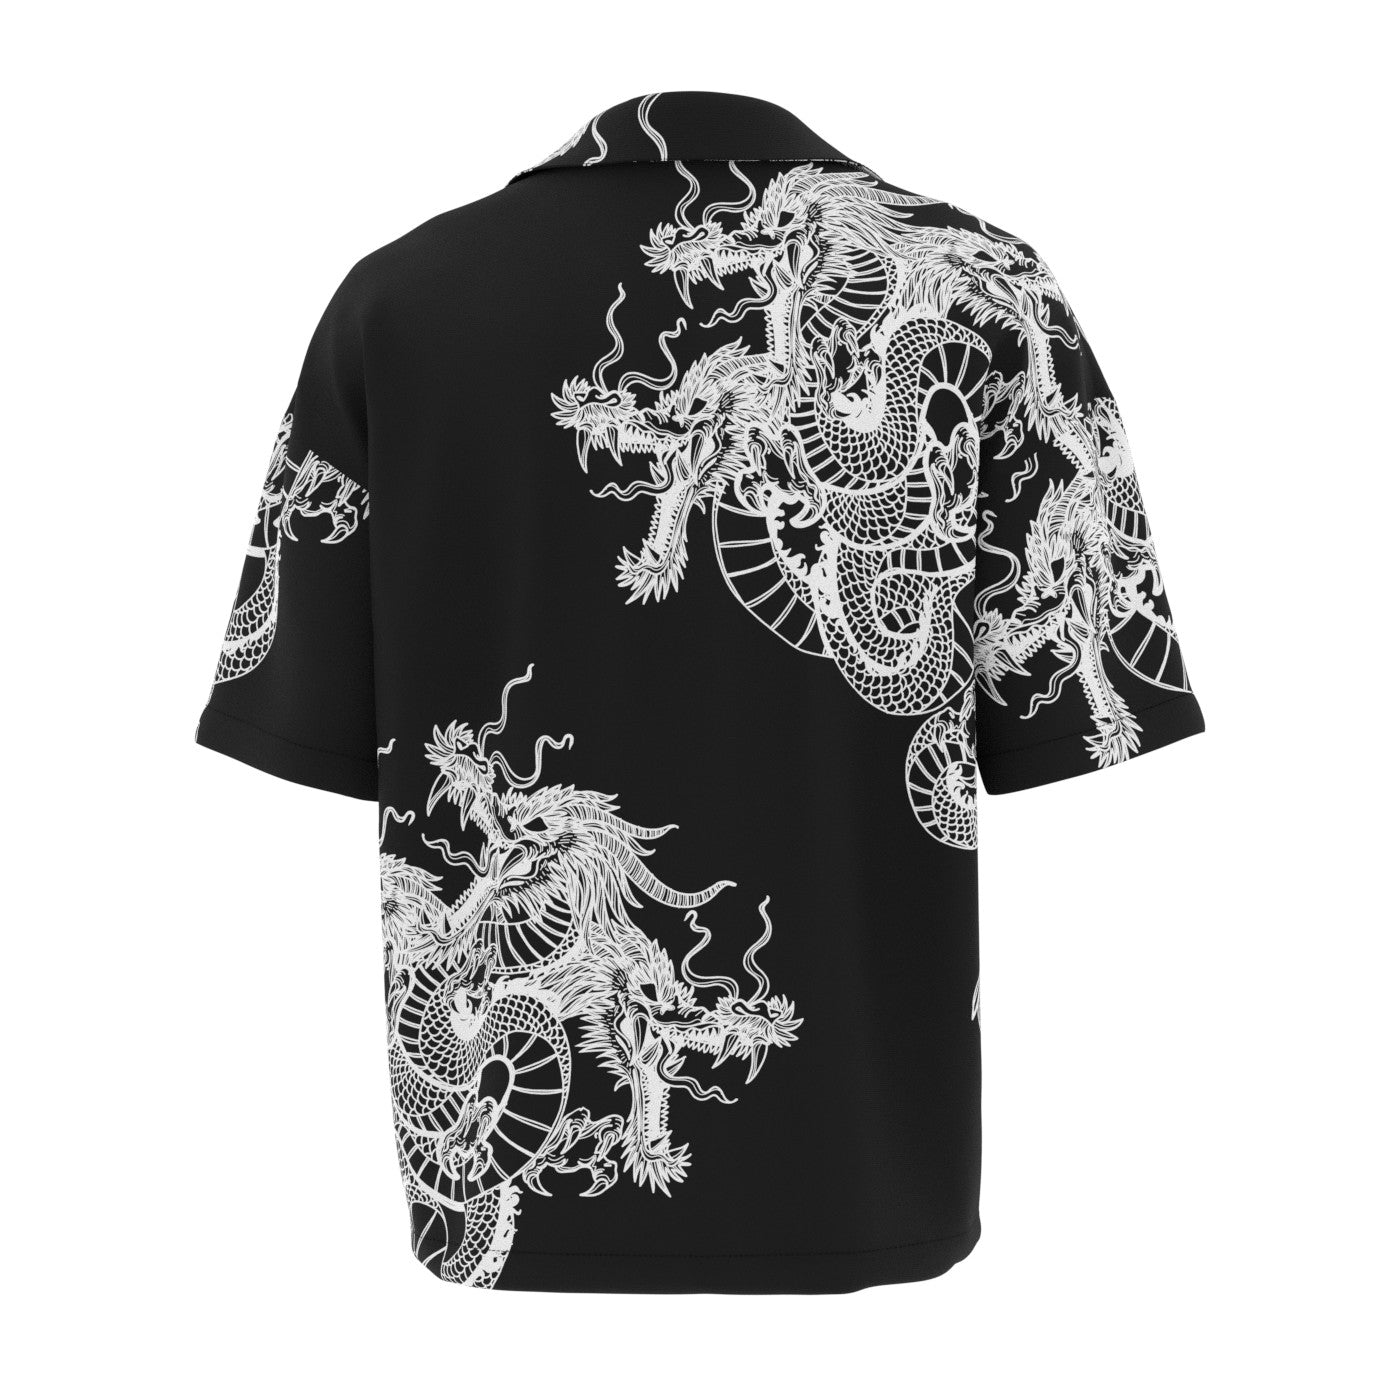 Black-N-White Dragons Oversized Button Shirt